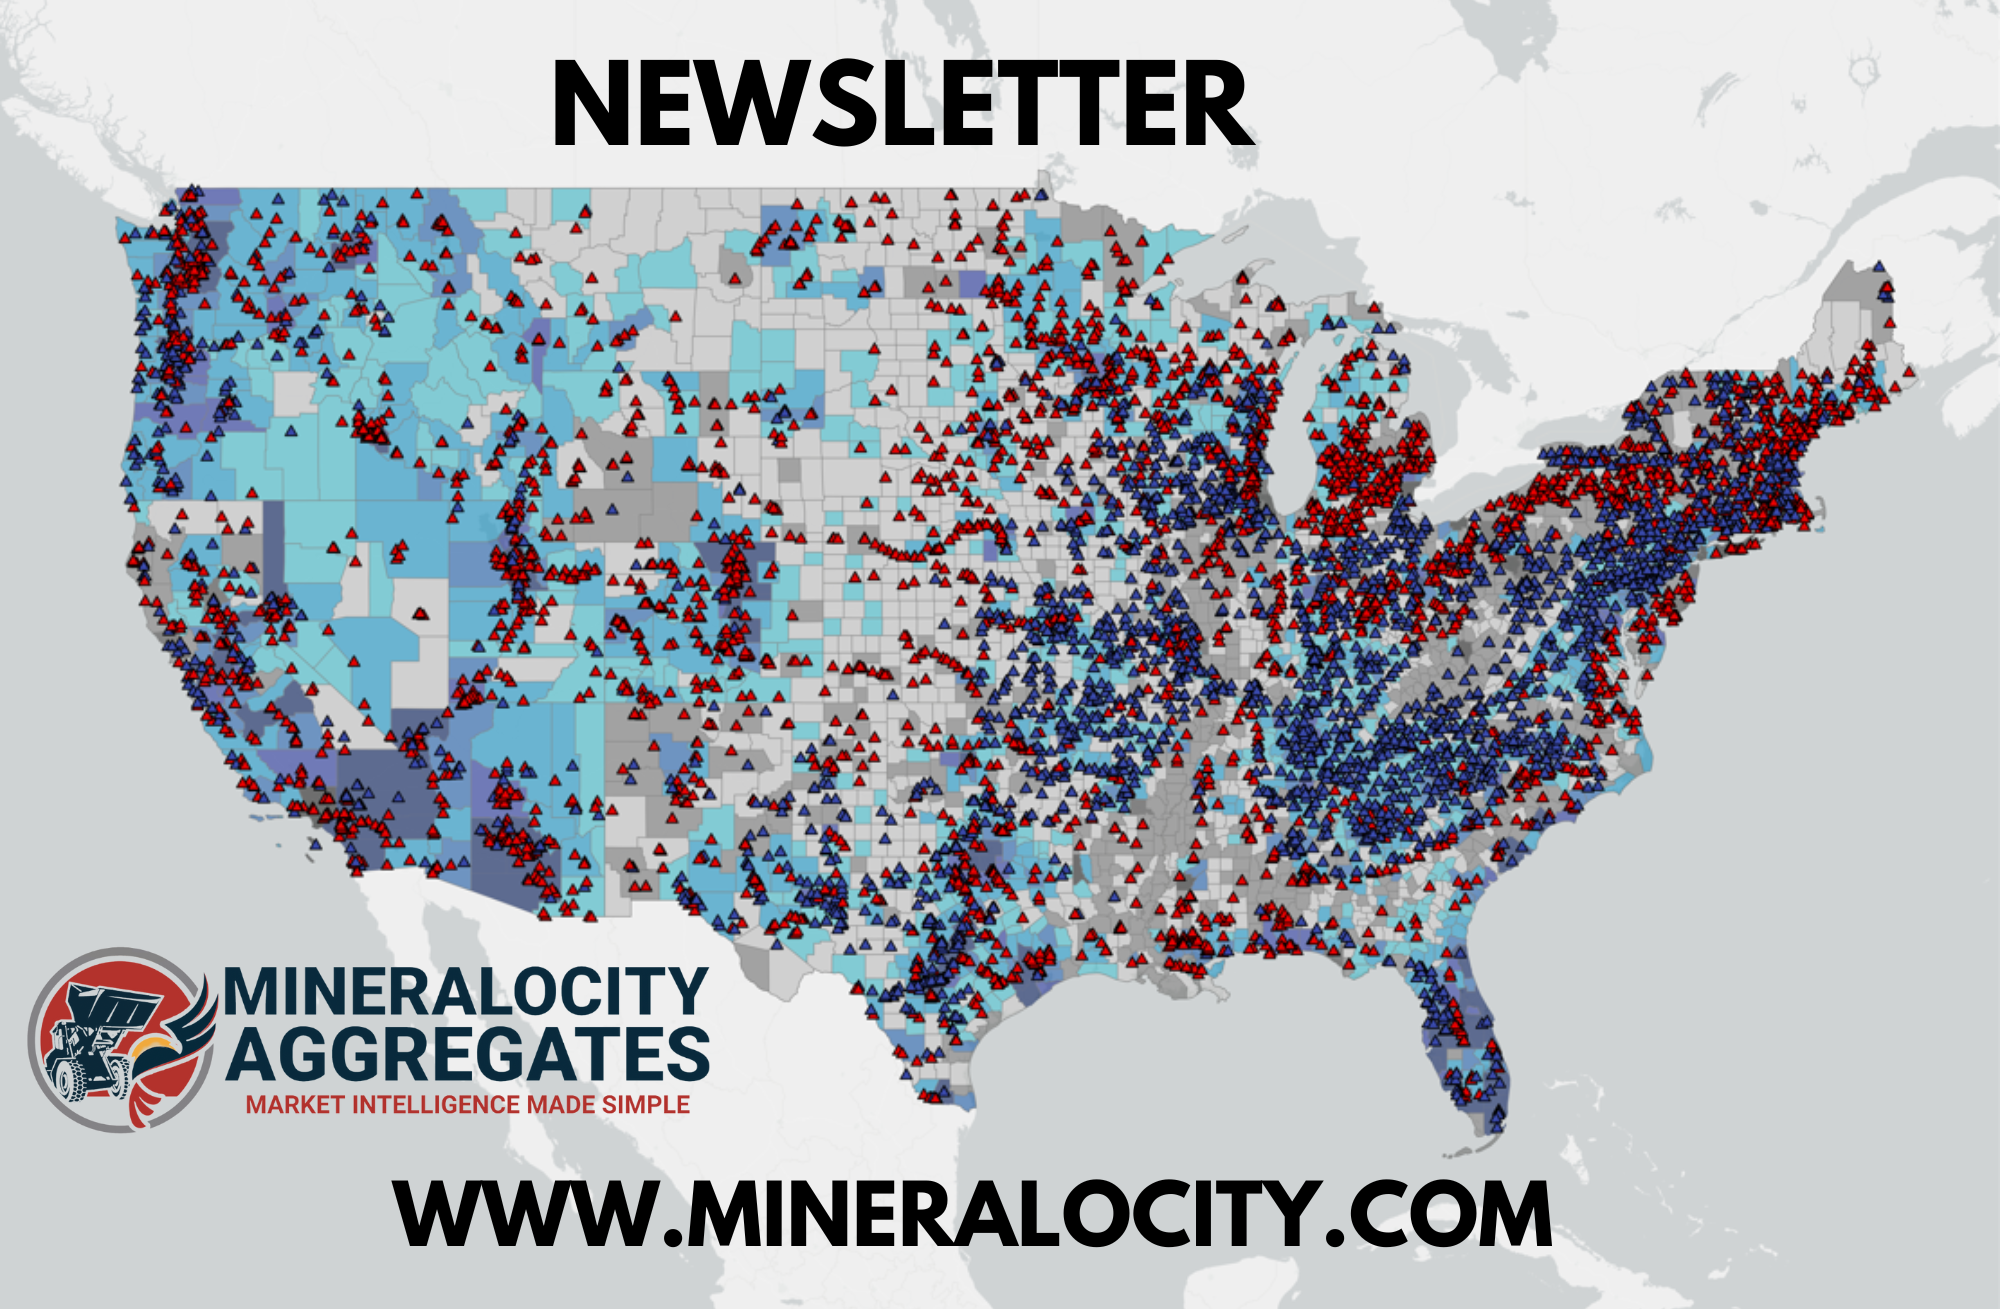 Mineralocity Aggregates Newsletter Newsletter